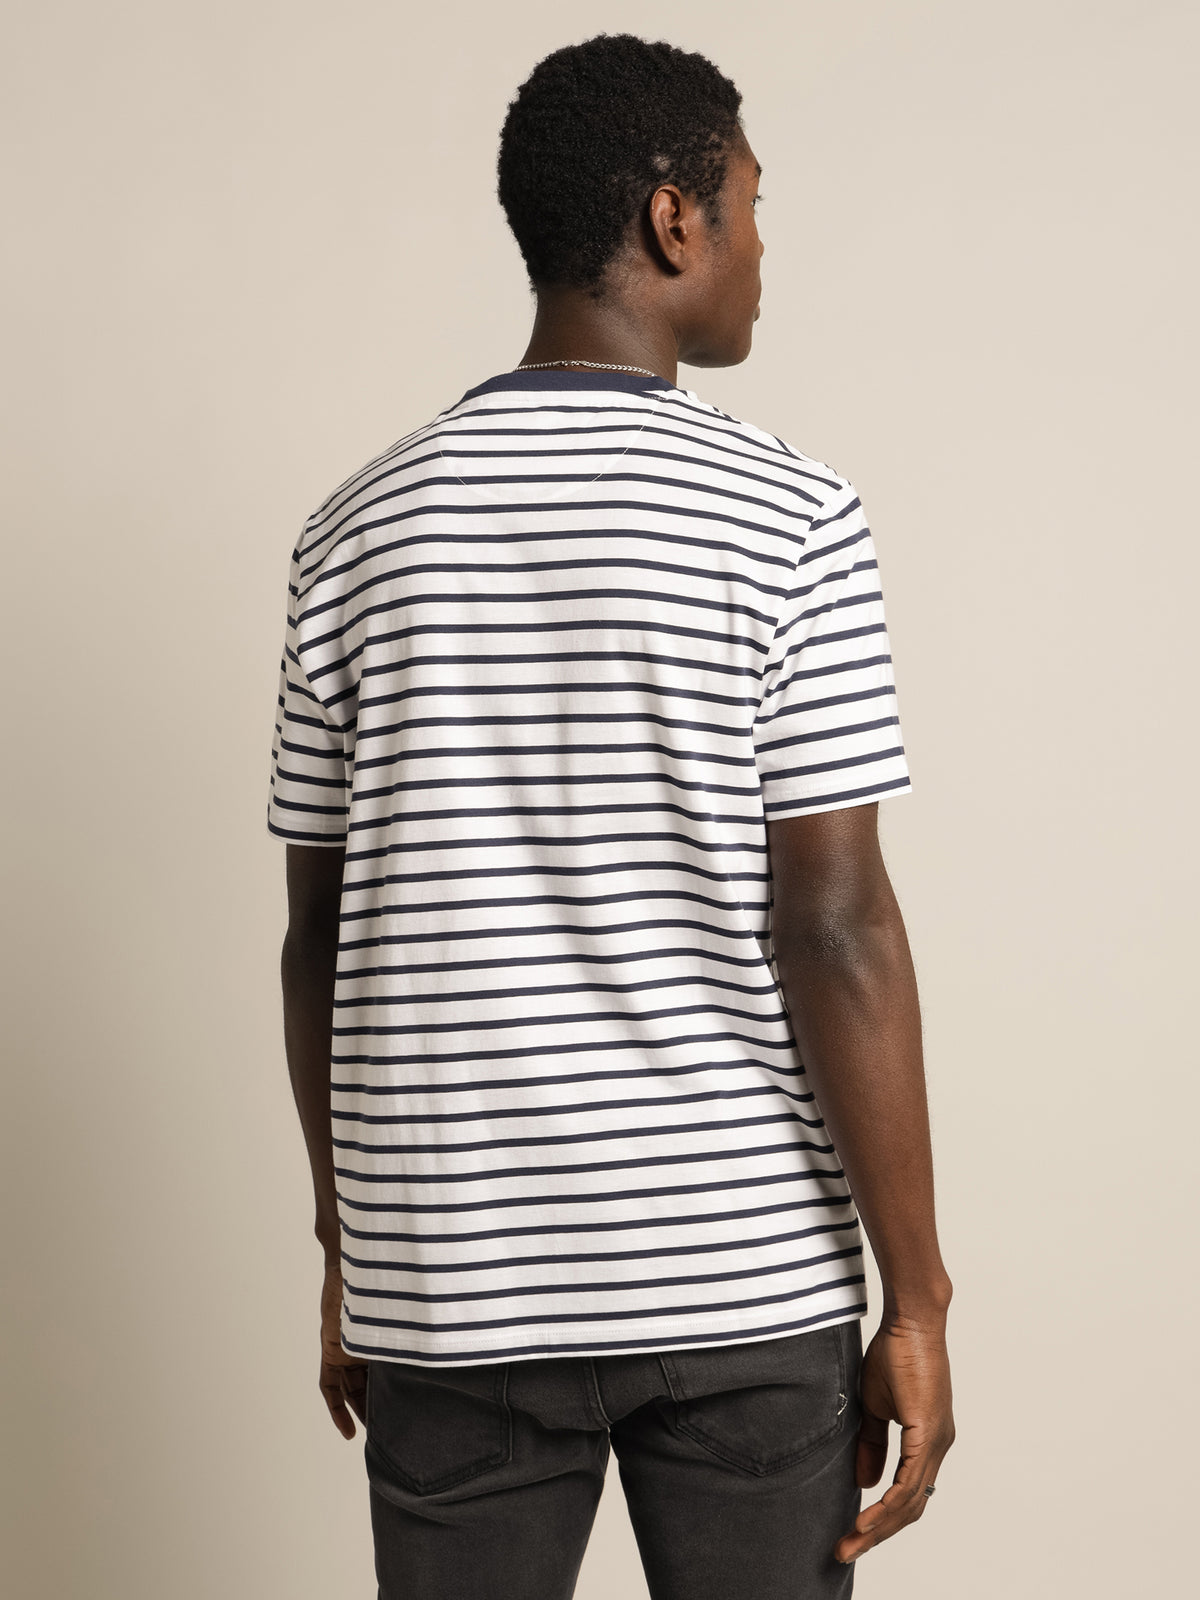 Breton Stripe T-Shirt in Navy &amp; White